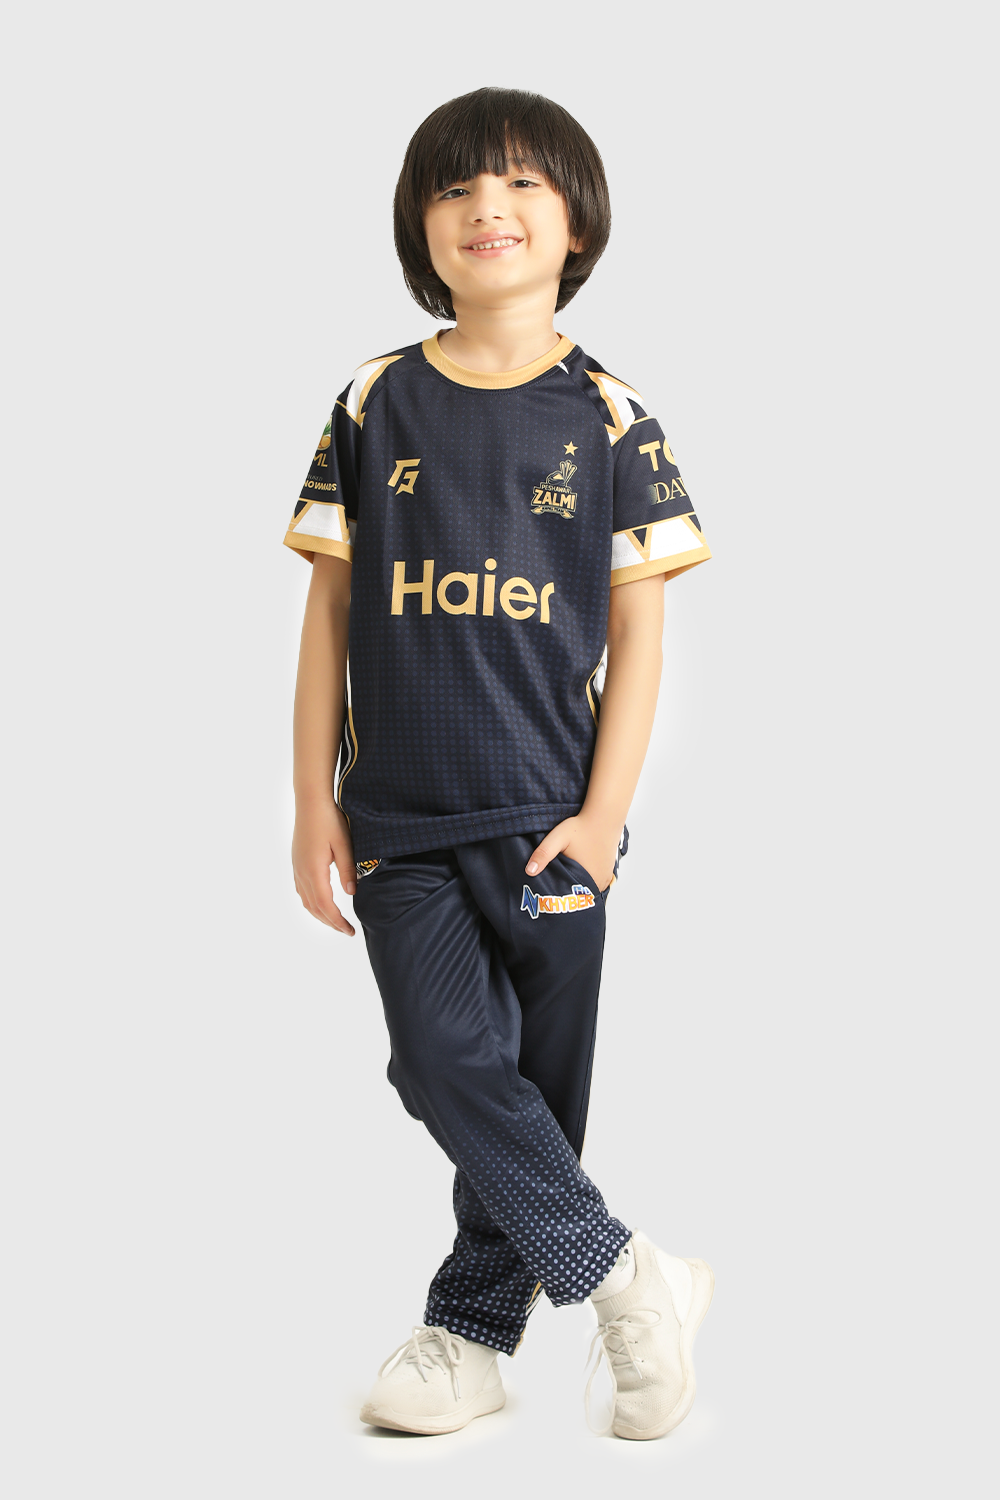 Peshawar Zalmi PSL 9 Juniors Training Kit (Shirt and Trouser)